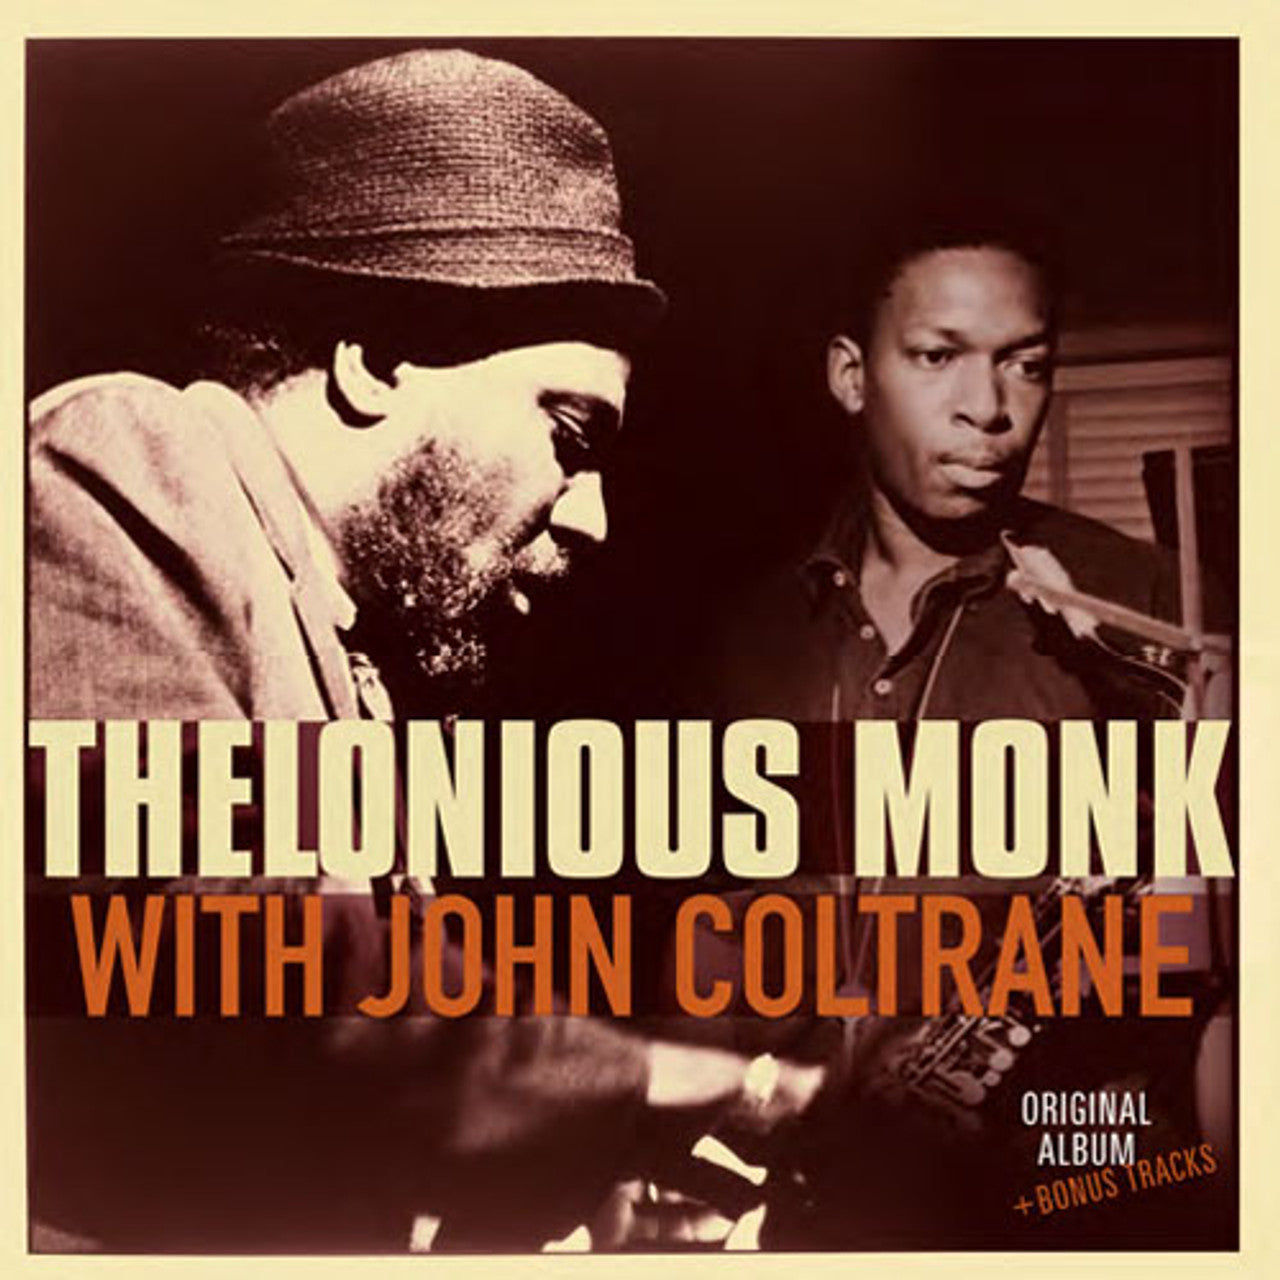 Thelonious Monk with John Coltrane (Original Album + Bonus Tracks)